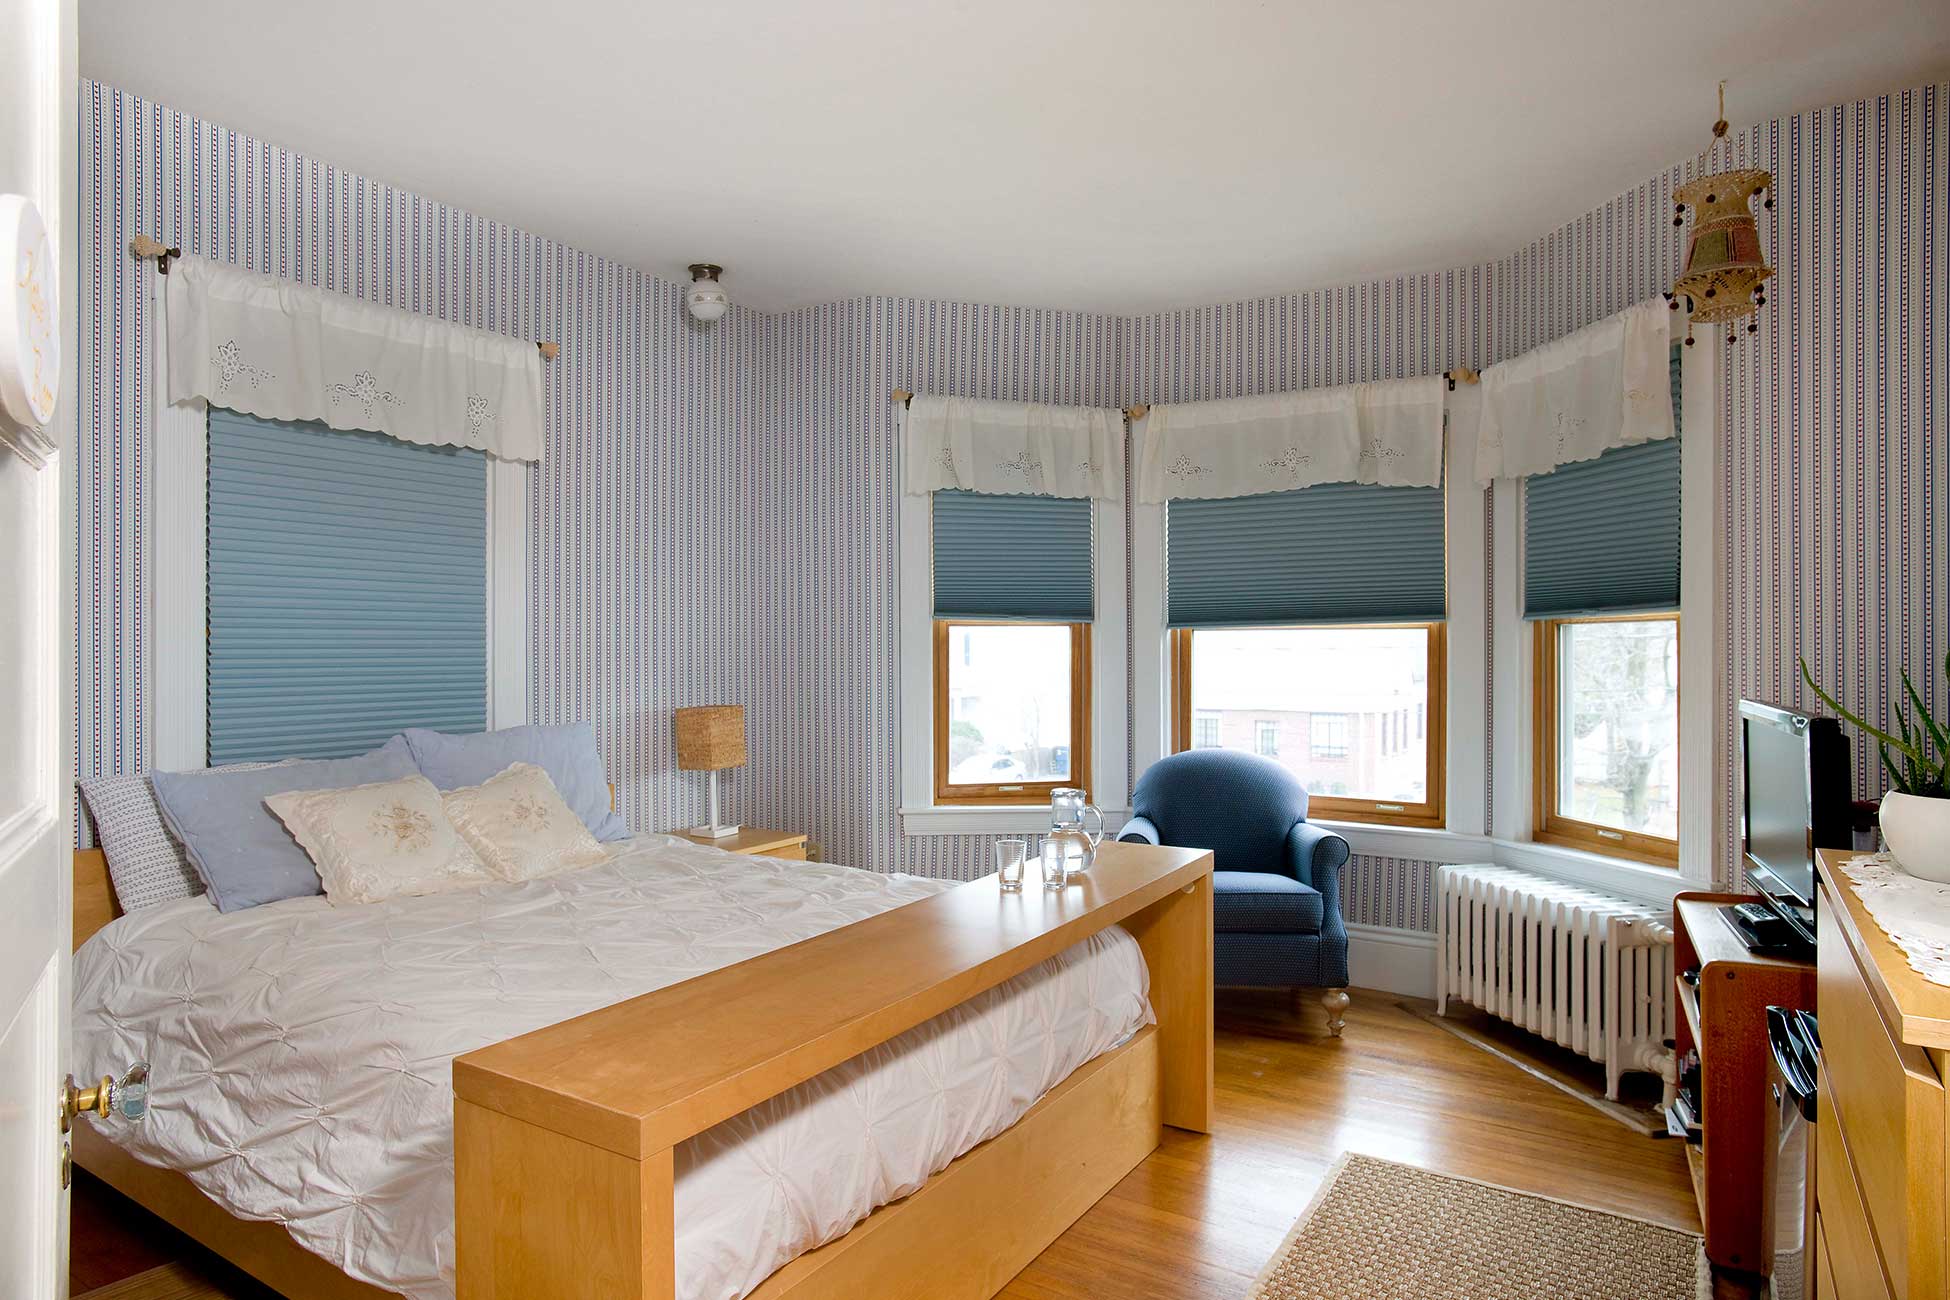 Katie's Room  | Village B&B | Bed & Breakfast in Newton, MA